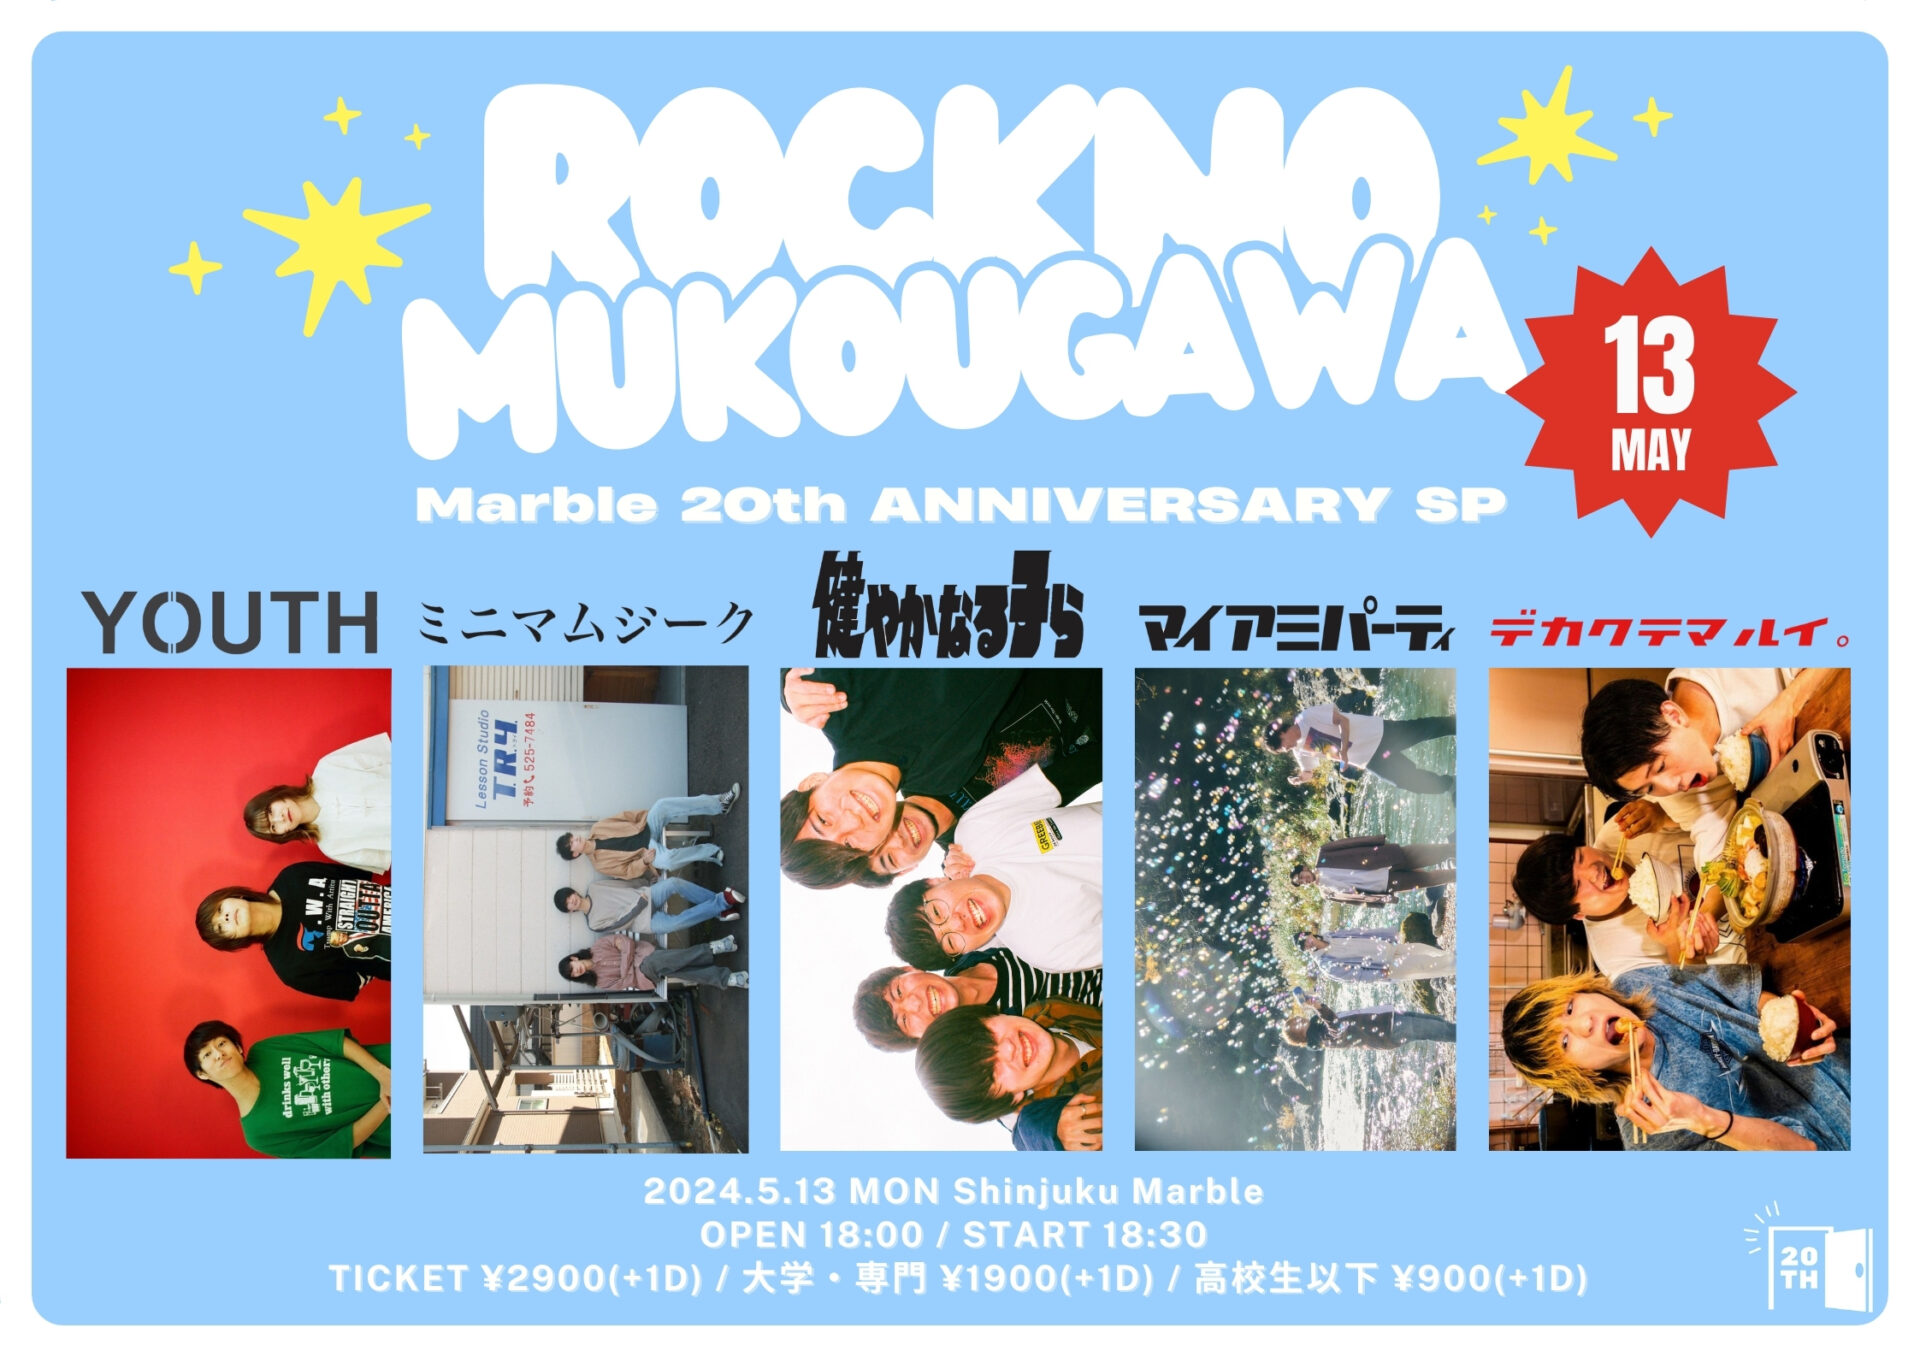 rocknomukougawa - Marble 20th ANNIVERSARY SP -